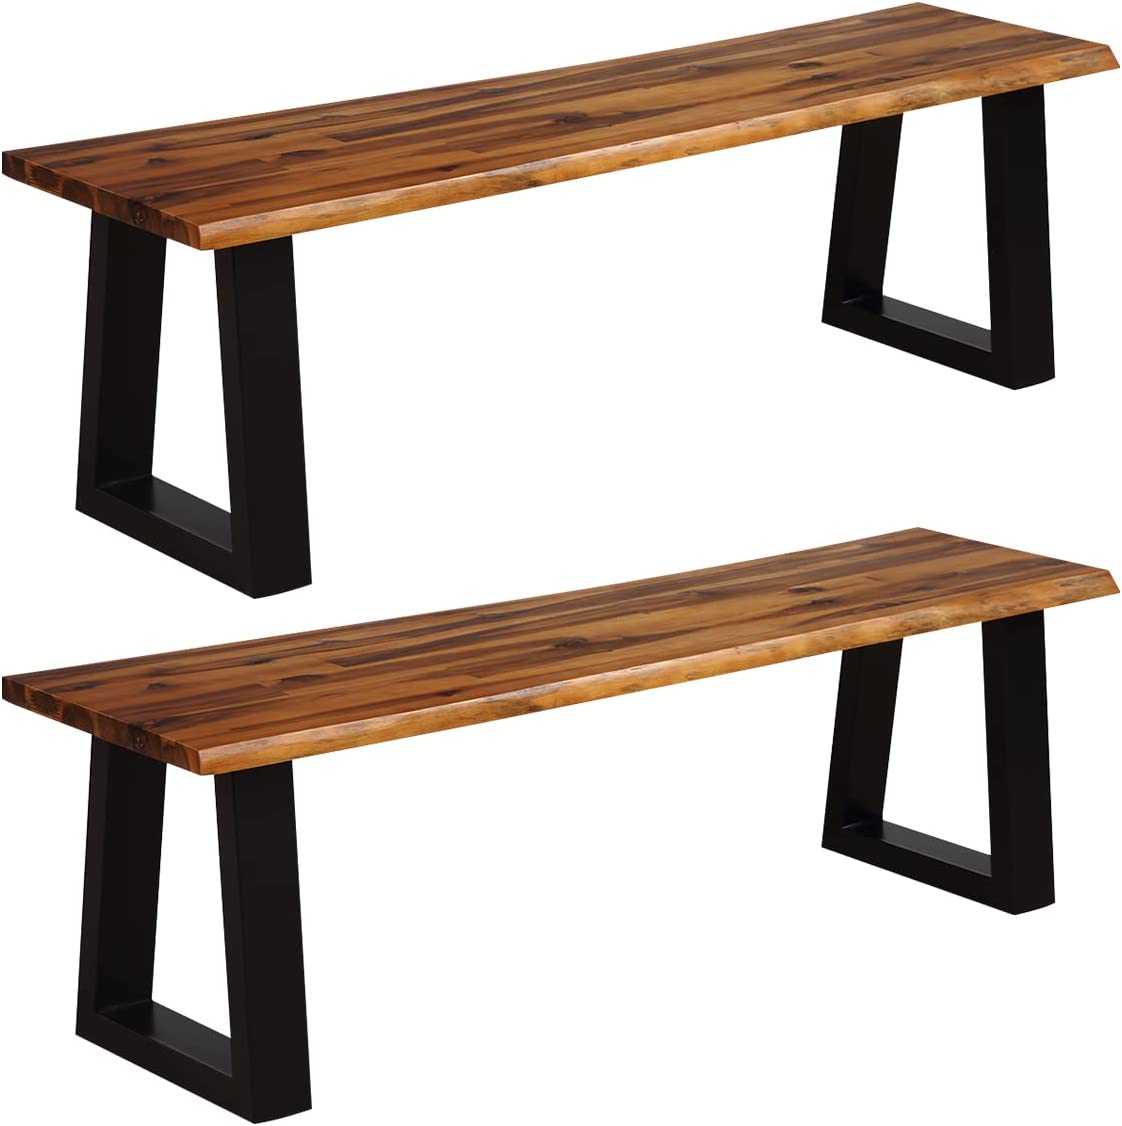 Giantex Wooden Dining Bench Seating Rustic Indoor &Outdoor Furniture (Rustic Brown&Black)